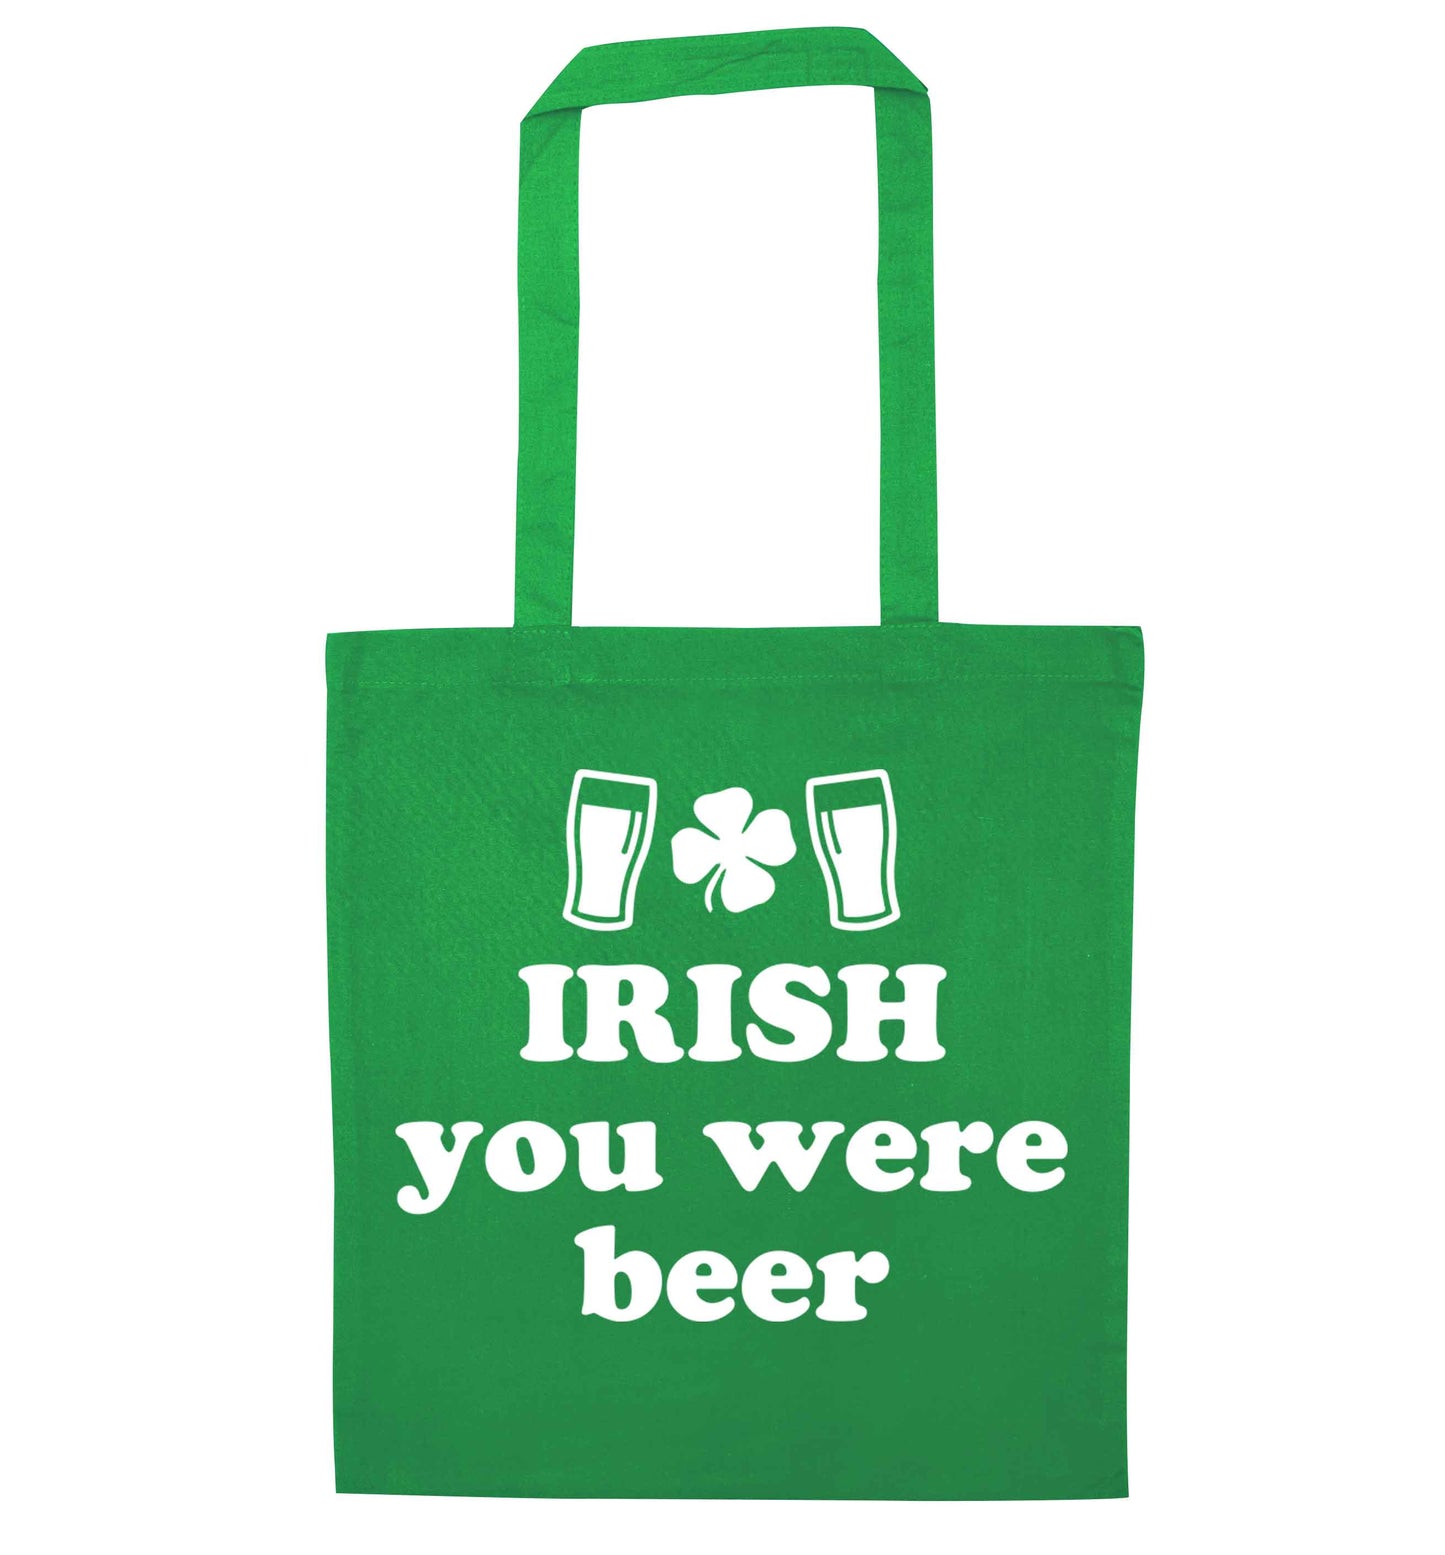 Irish you were beer green tote bag